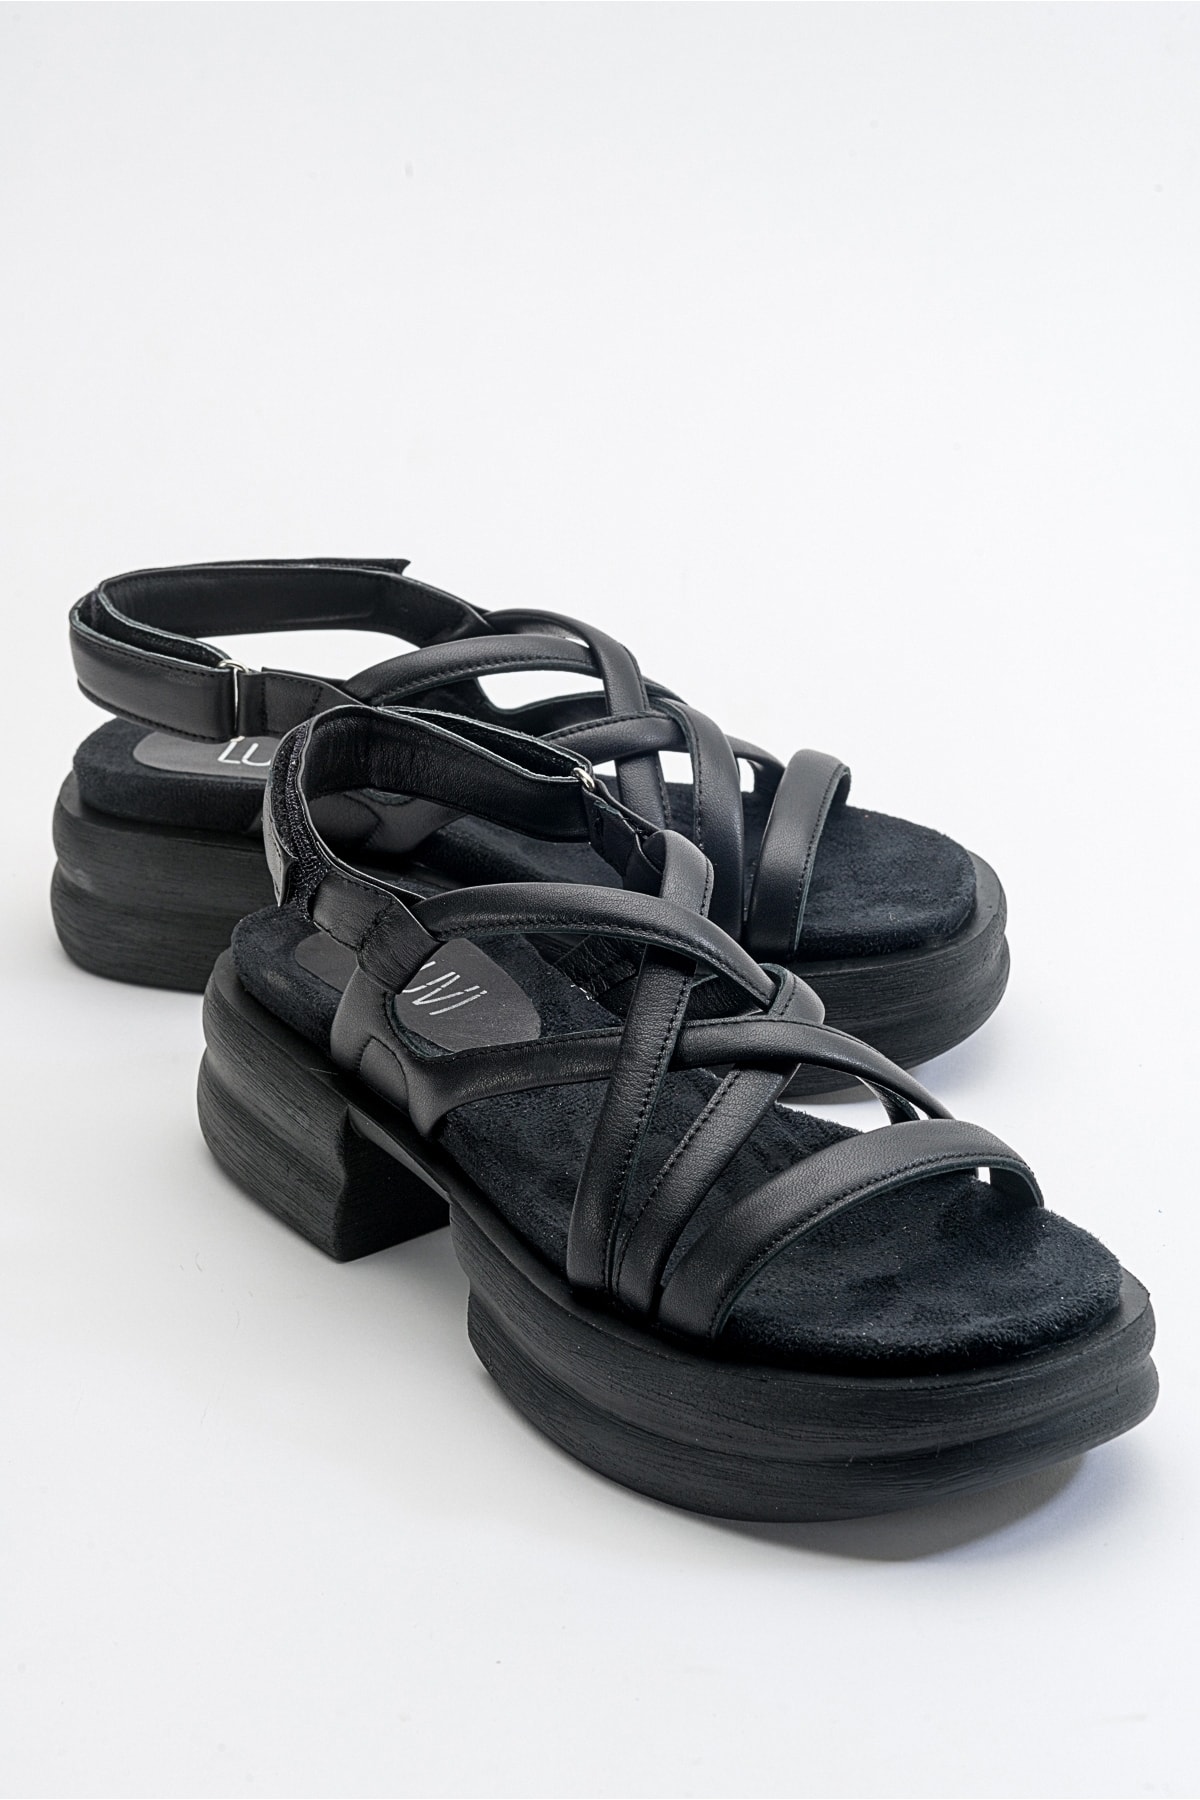 LuviShoes Senza Women's Black Skin Genuine Leather Sandals